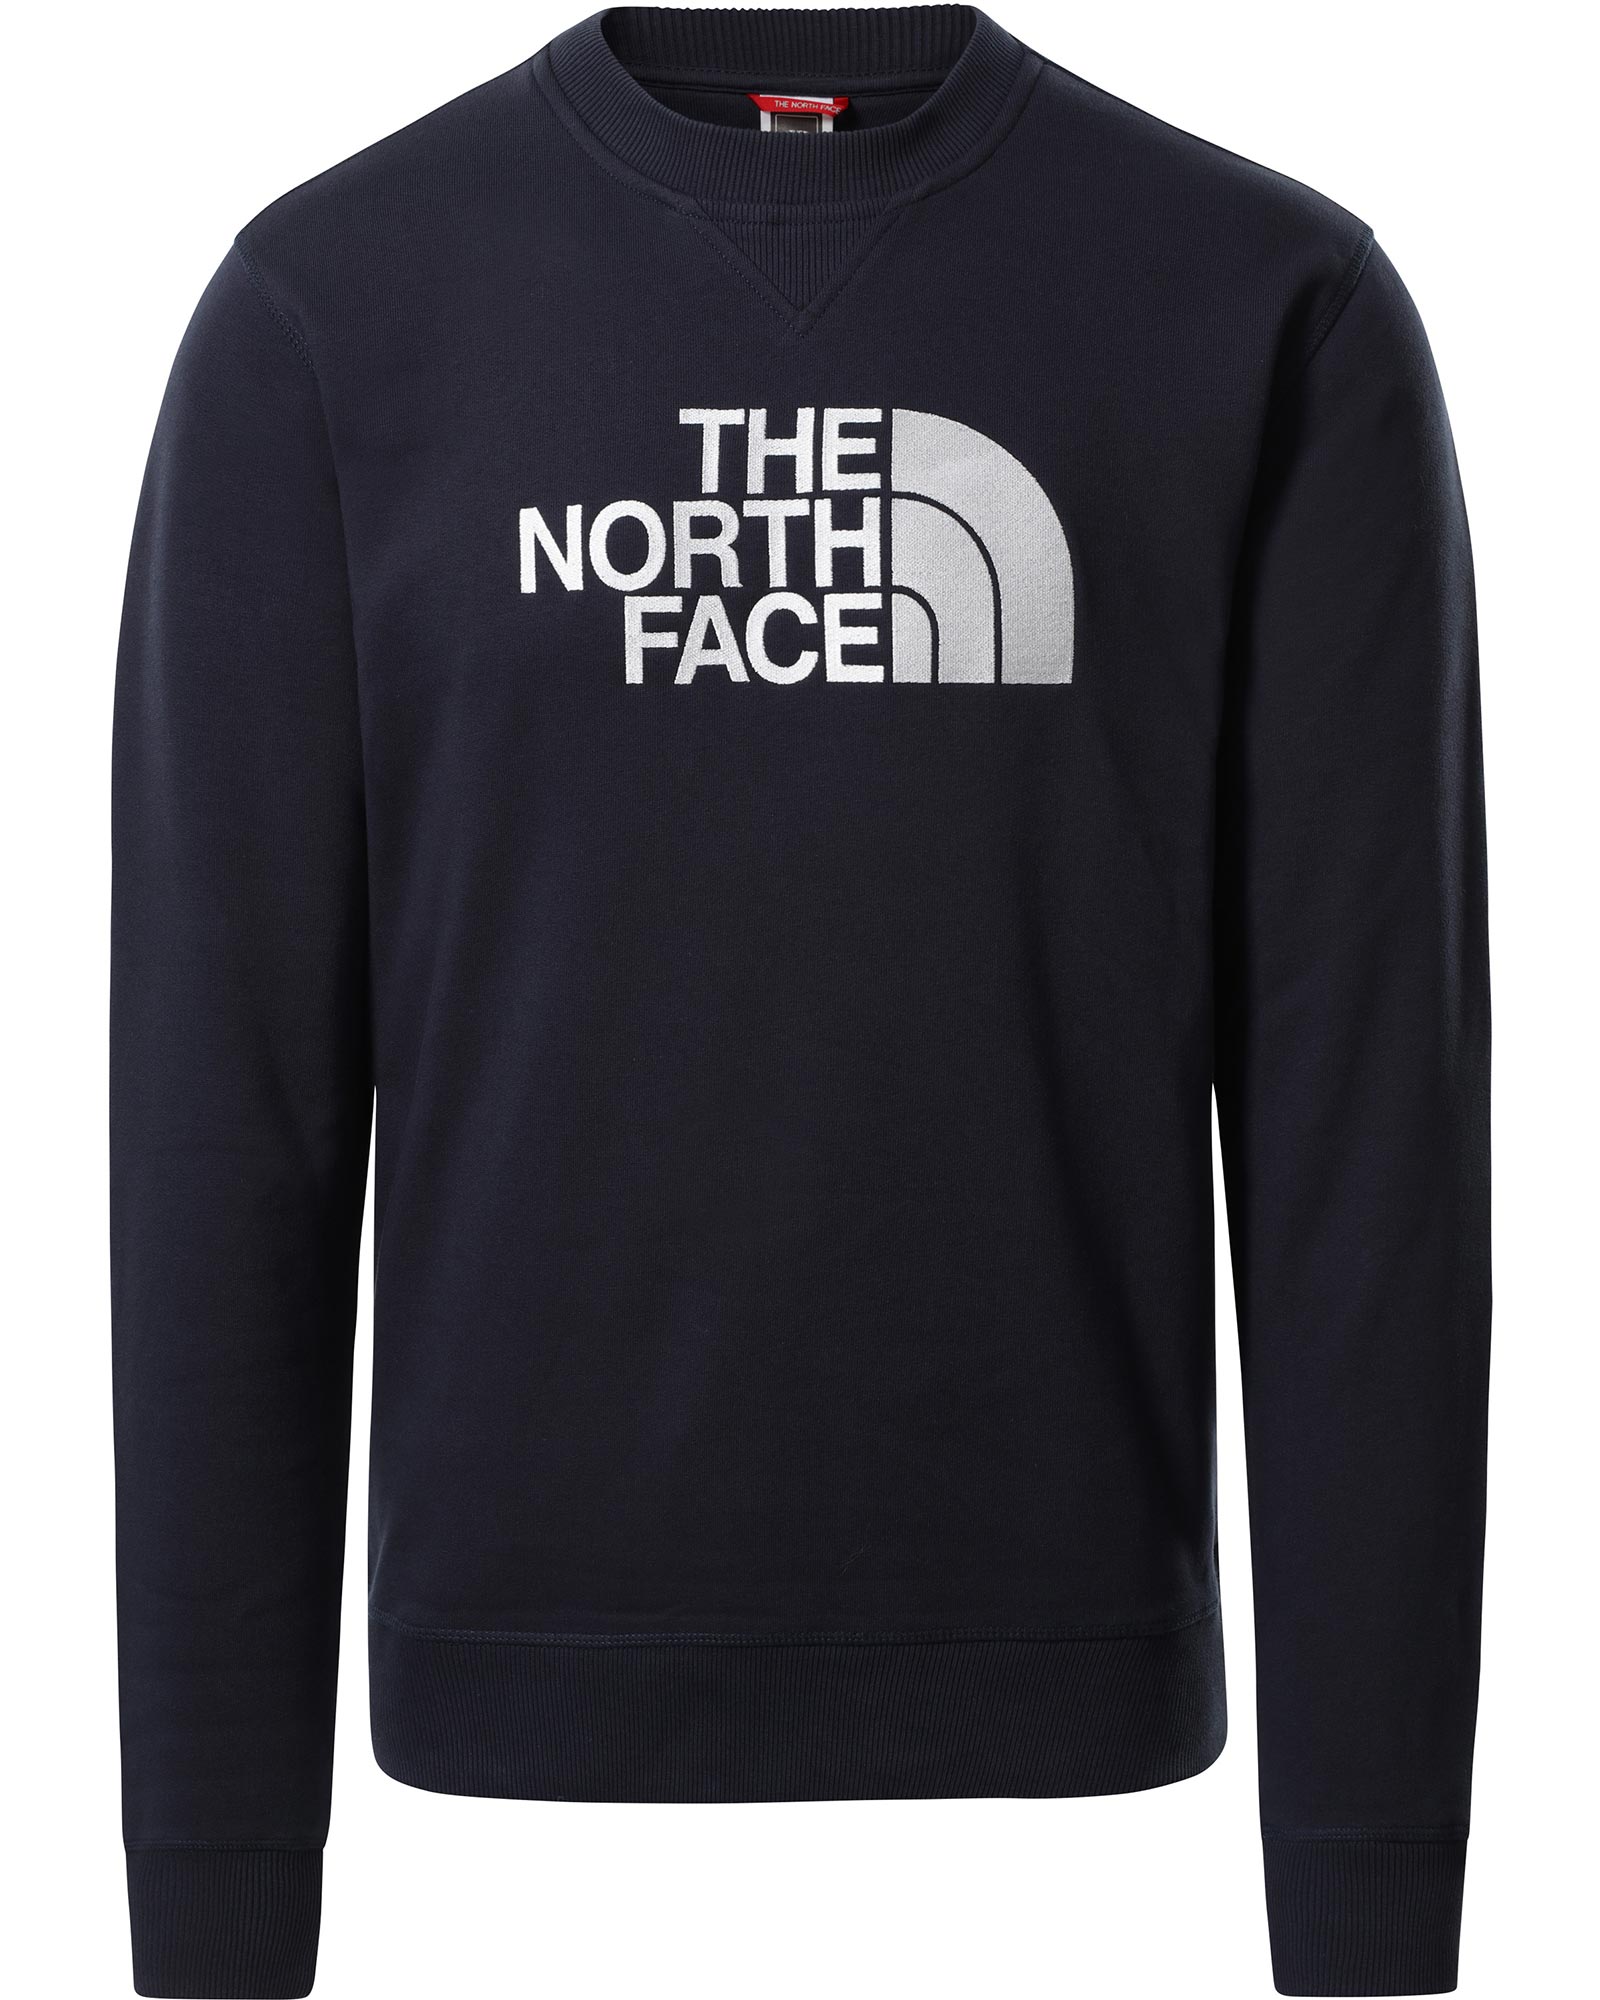 The North Face Drew Peak Men’s Crew - Urban Navy S